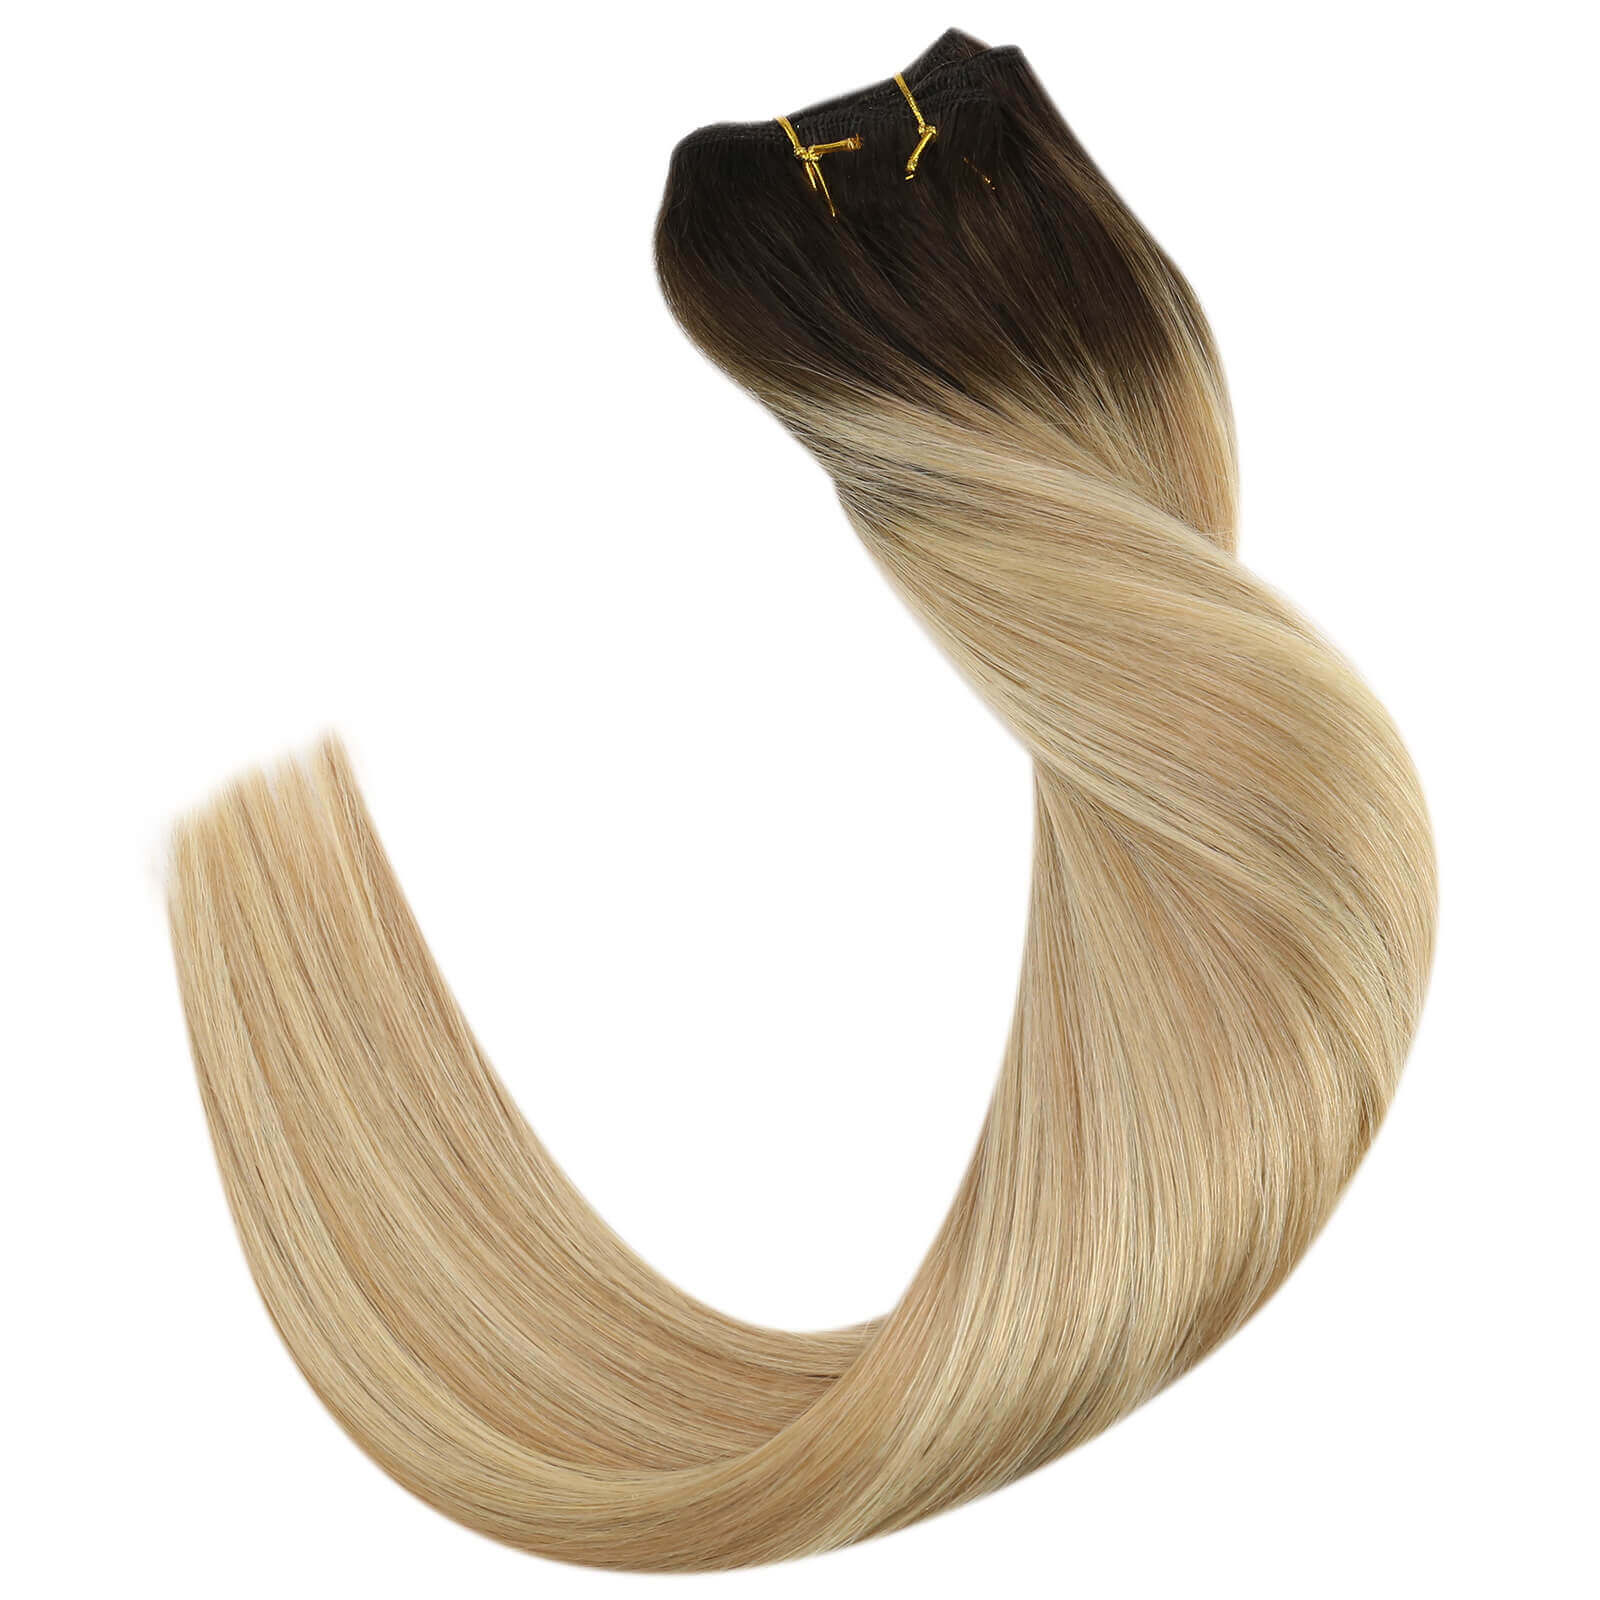 Human Hairpiece 100g Dark Brown to Light Brown with Light Blonde Hair